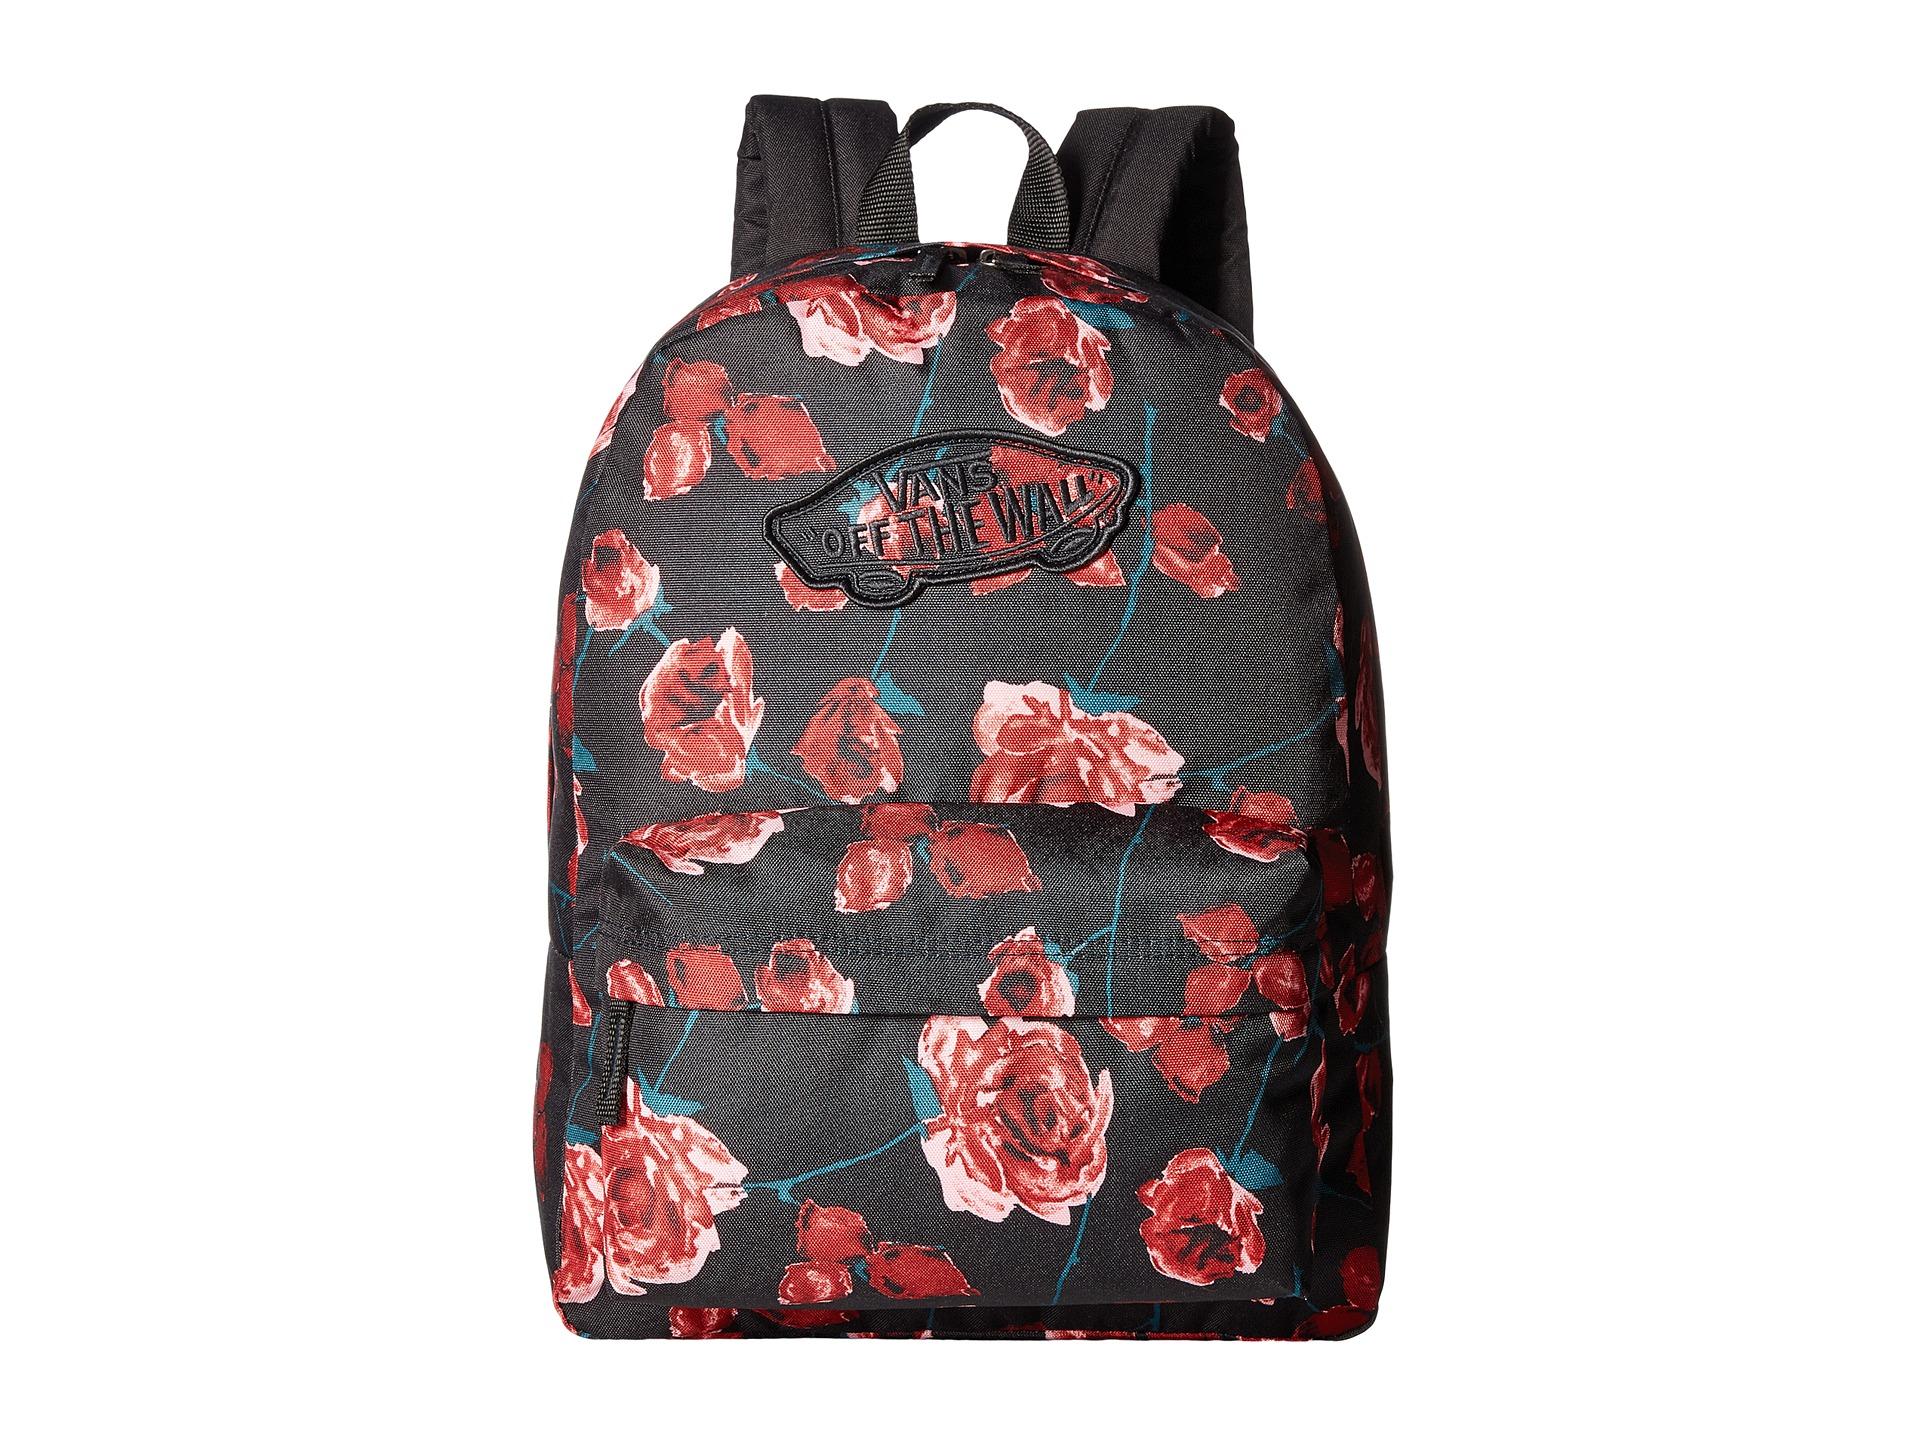 vans black backpack with roses